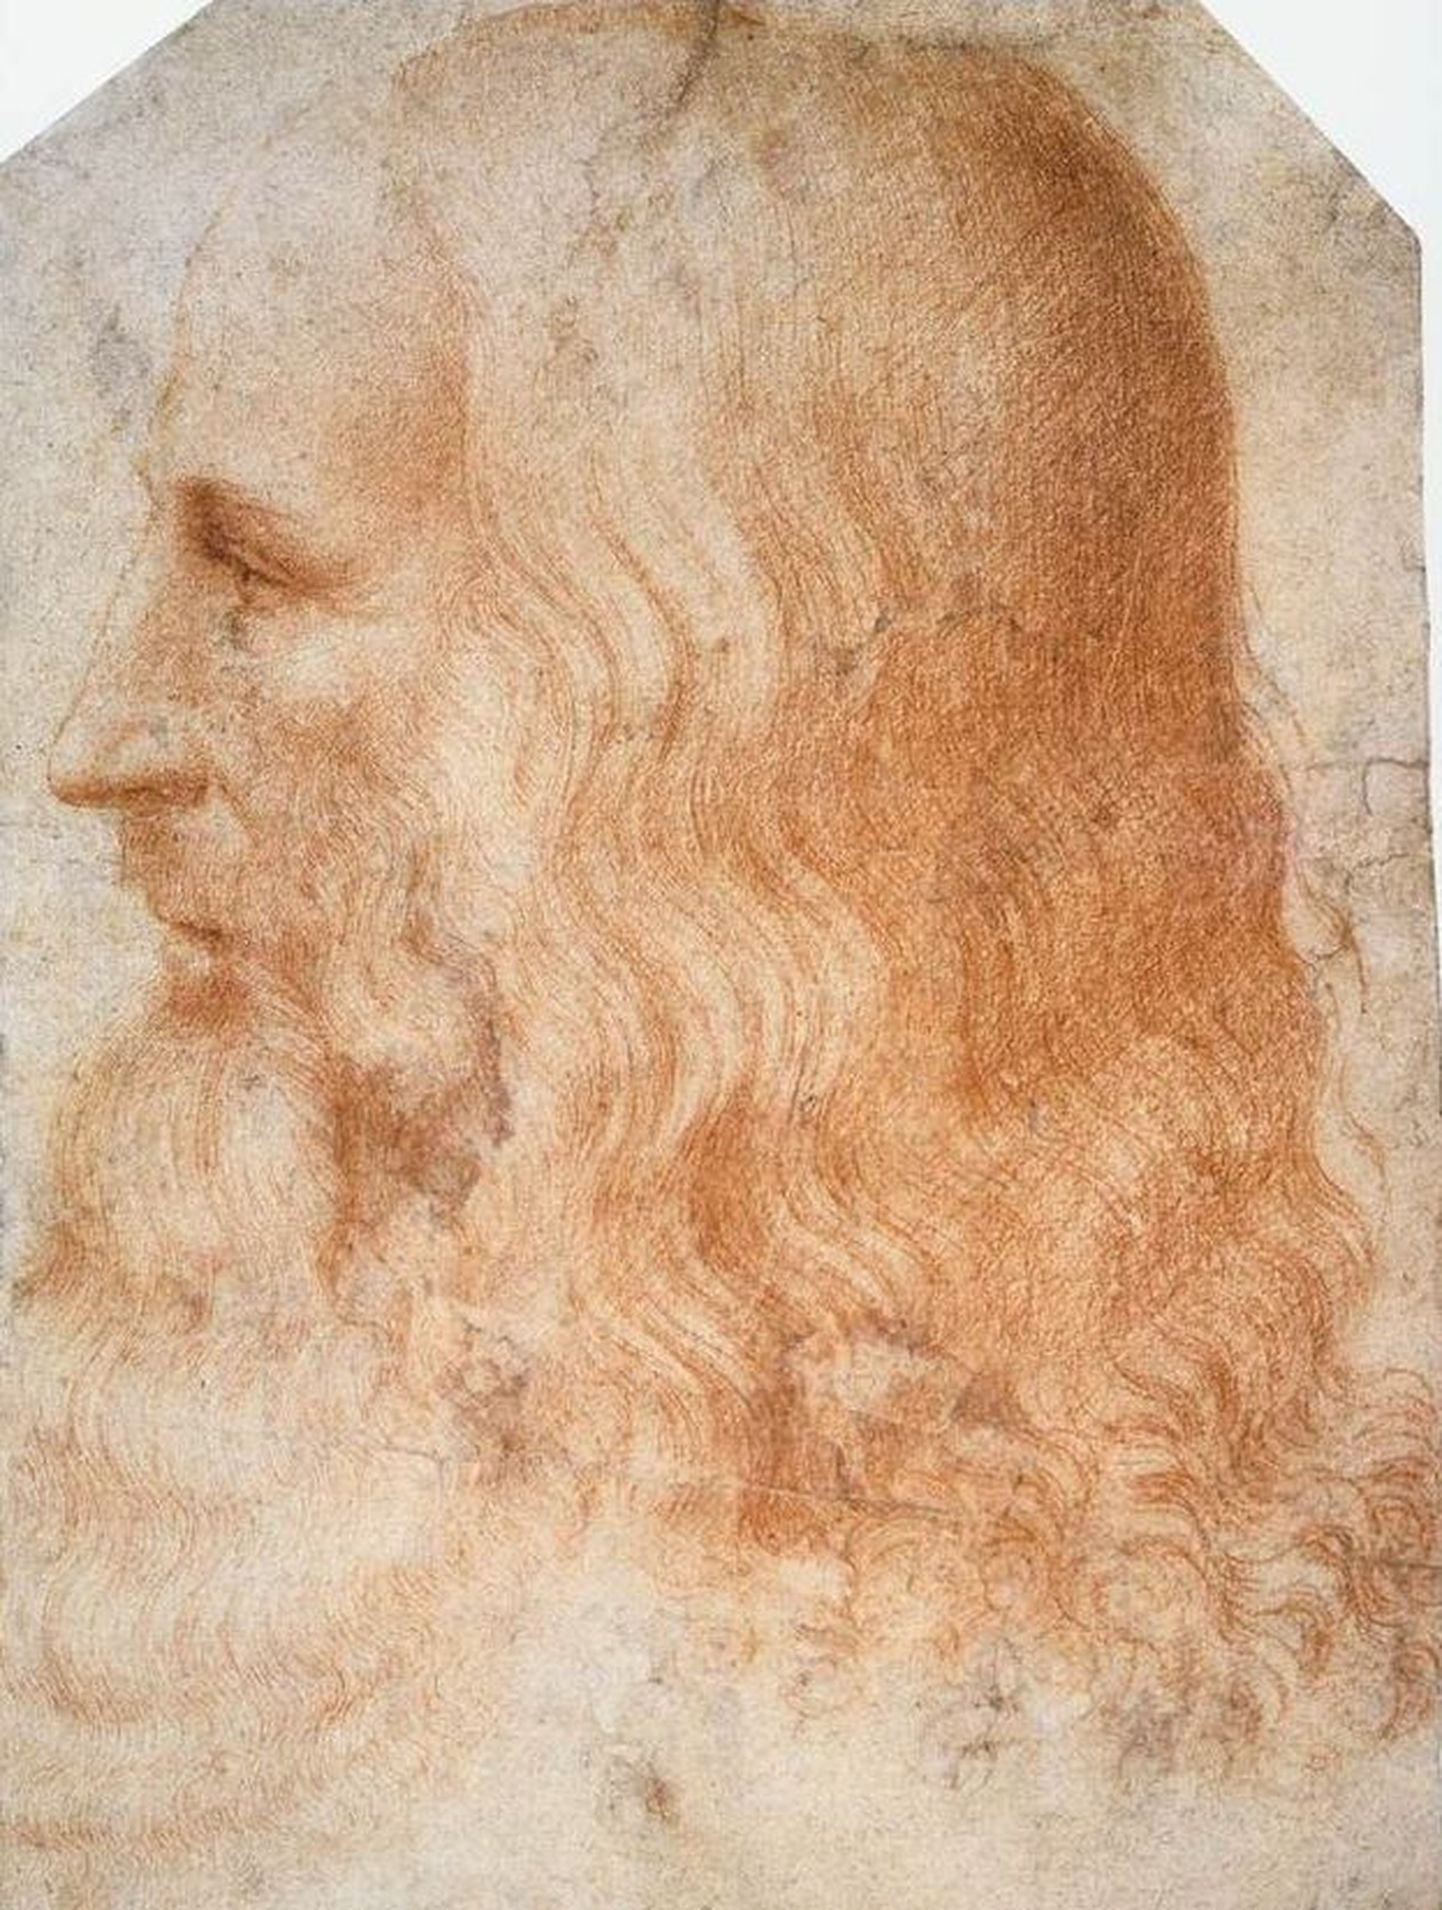 Inimkultuur 600 eKr – 2012 pKr viie minutiga. Leonardo da Vinci portree